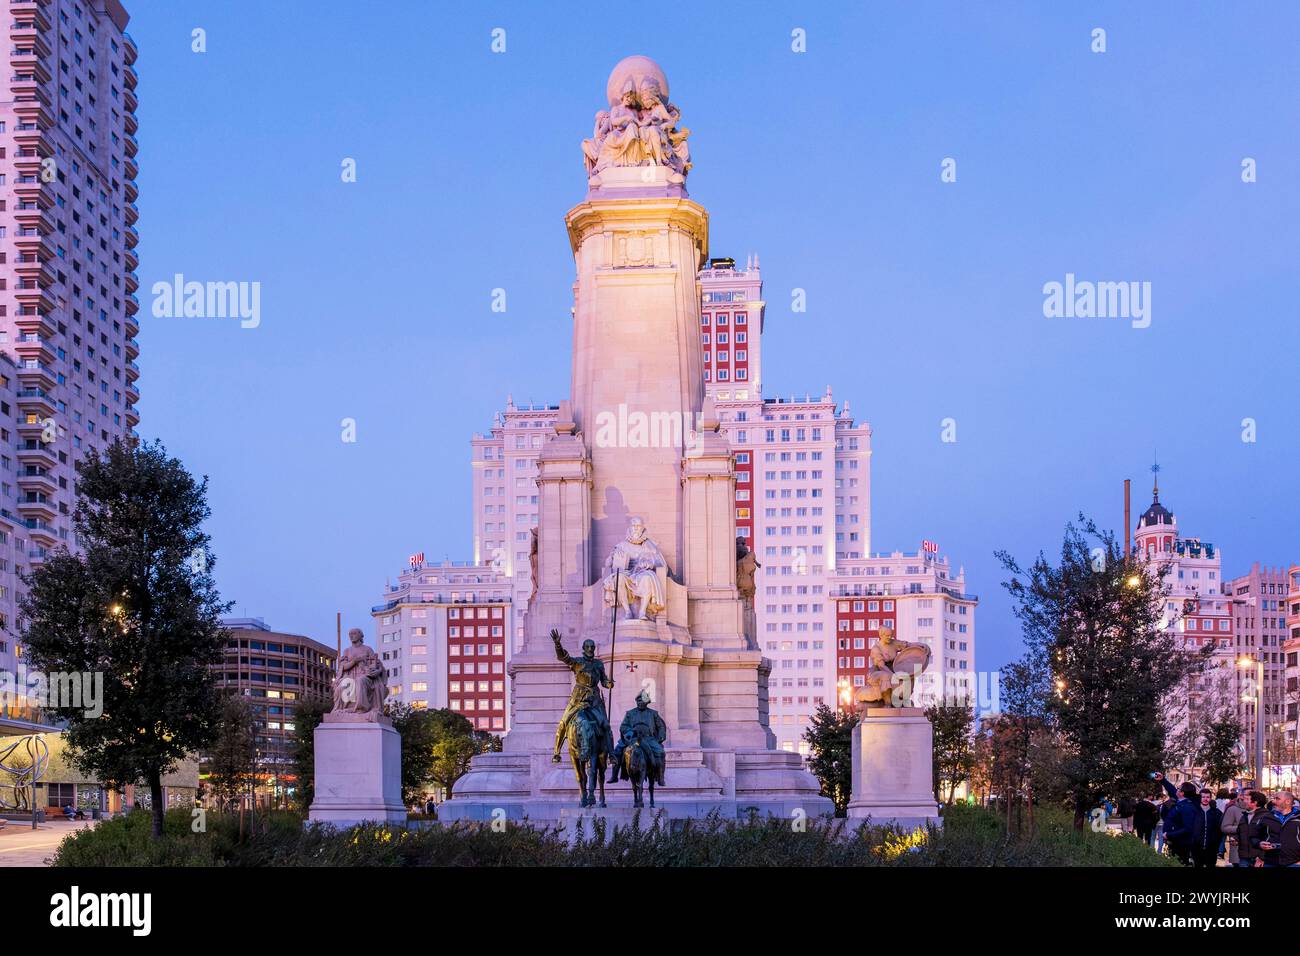 Spain, Madrid, Plaza de Espana (Europe Square), Don Quixote statue built by sculptor Lorenzo Coullaut Valera in 1930 Stock Photo